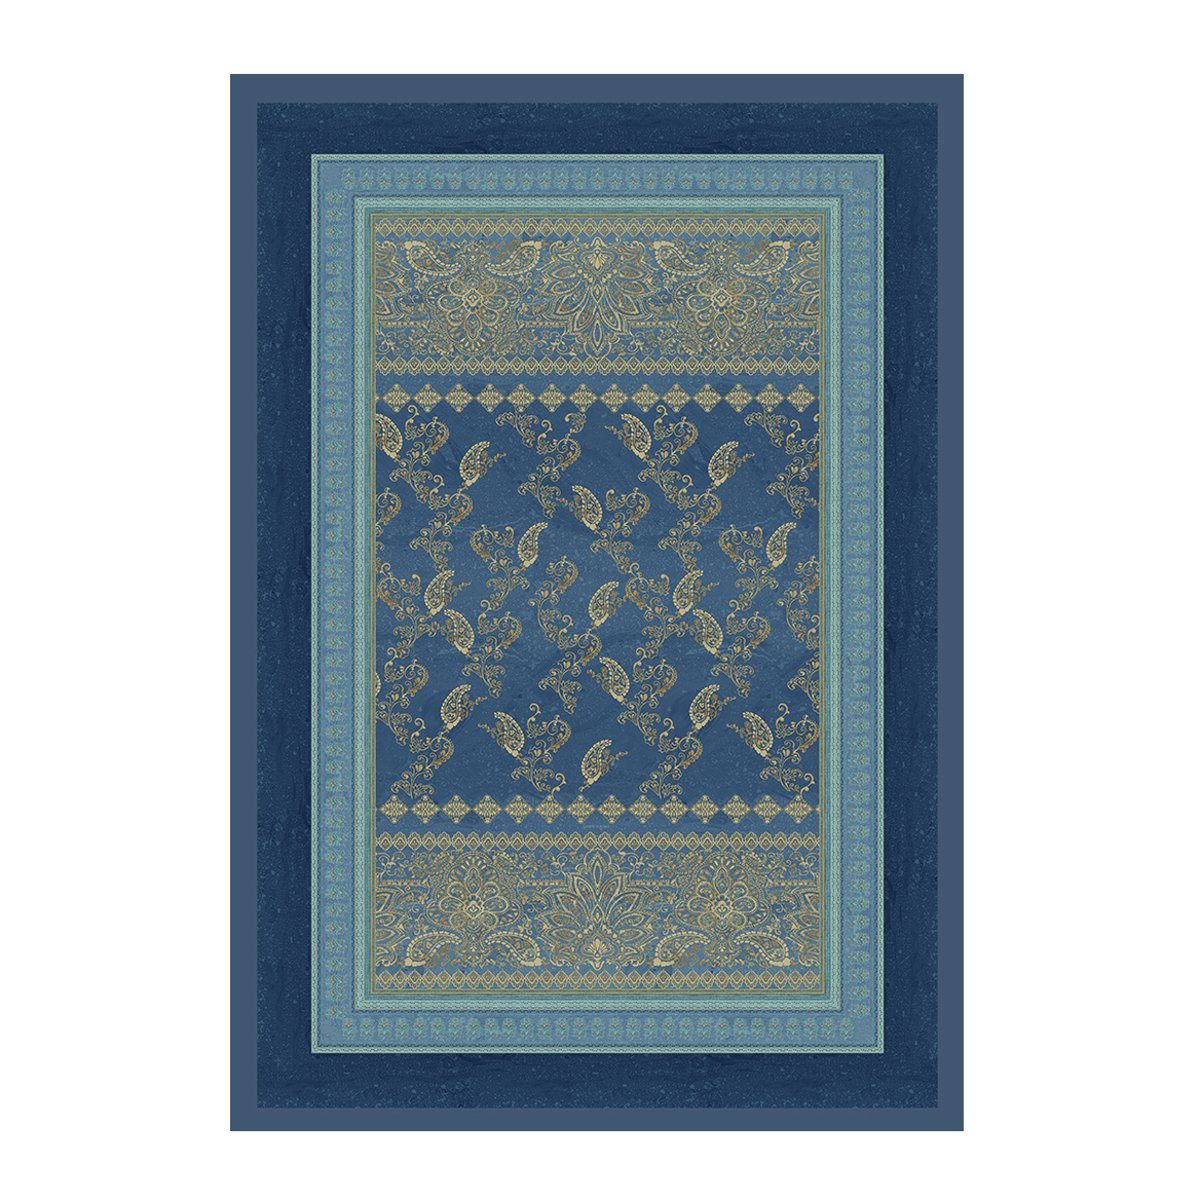 Plaid Bassetti Granfoulard Plaid Decke Wohndecke Matera B1 Blau 135x190, Bassetti, Hochwerige italienische Markenqualität blu